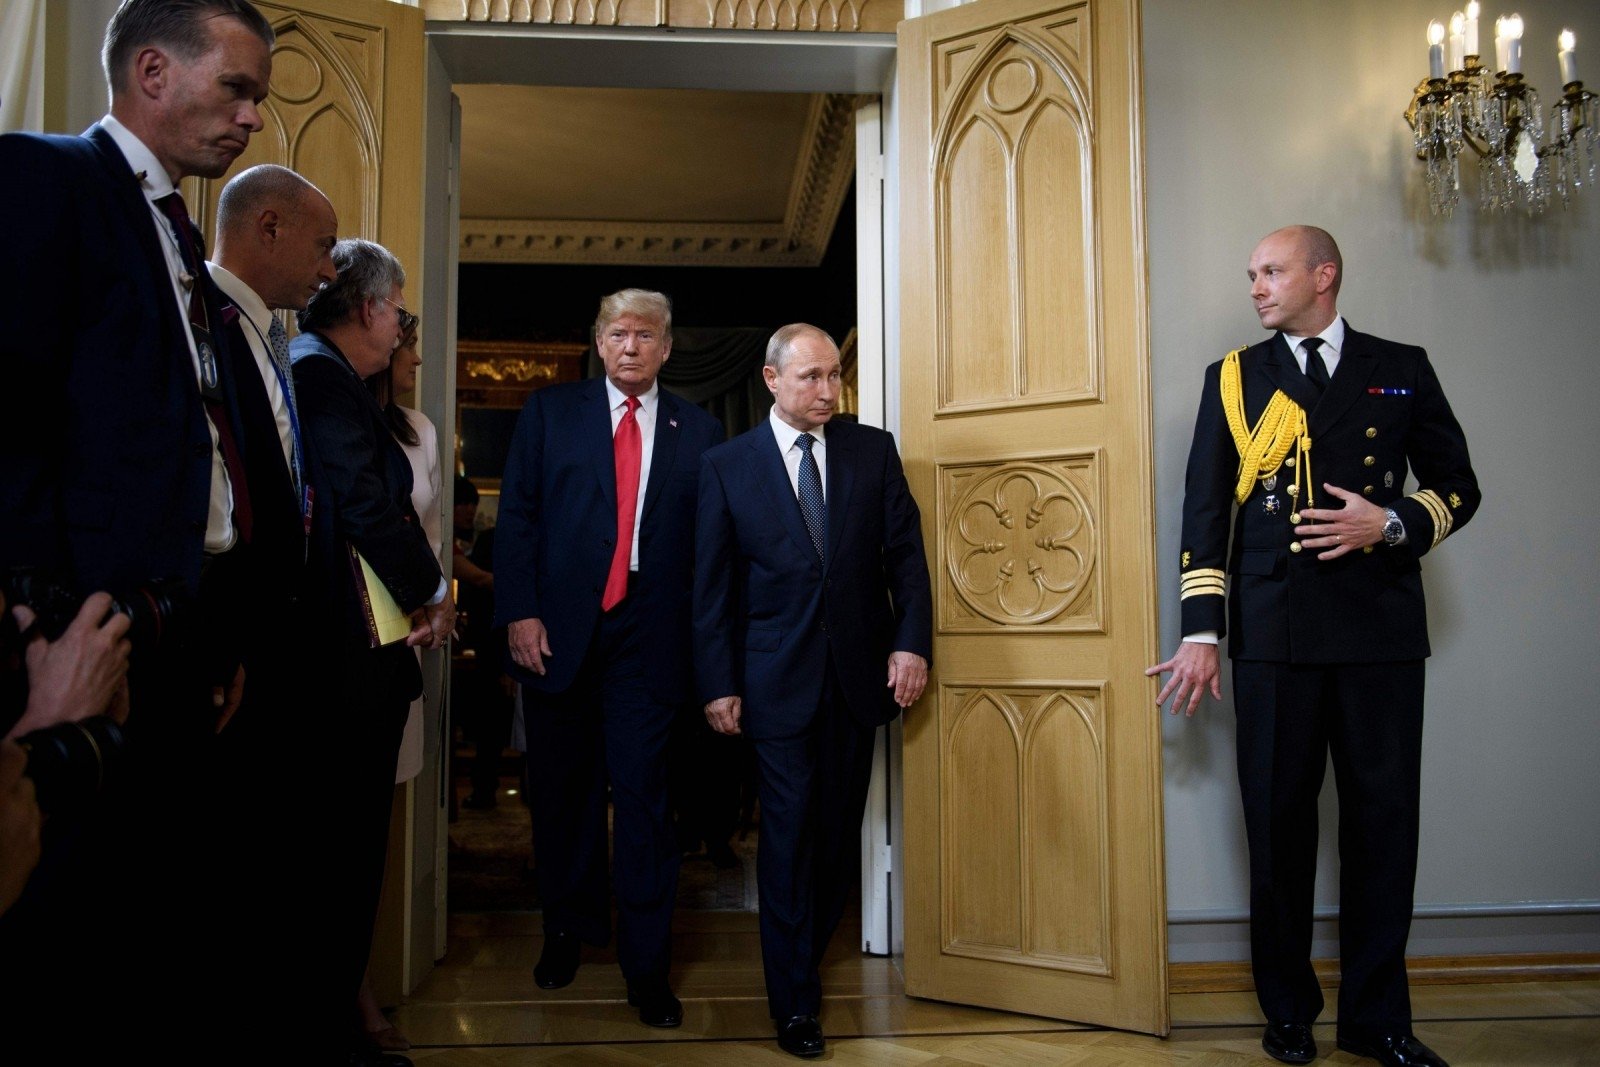 The Washington Times: Путин затормозил реализацию интересов США в Евразии